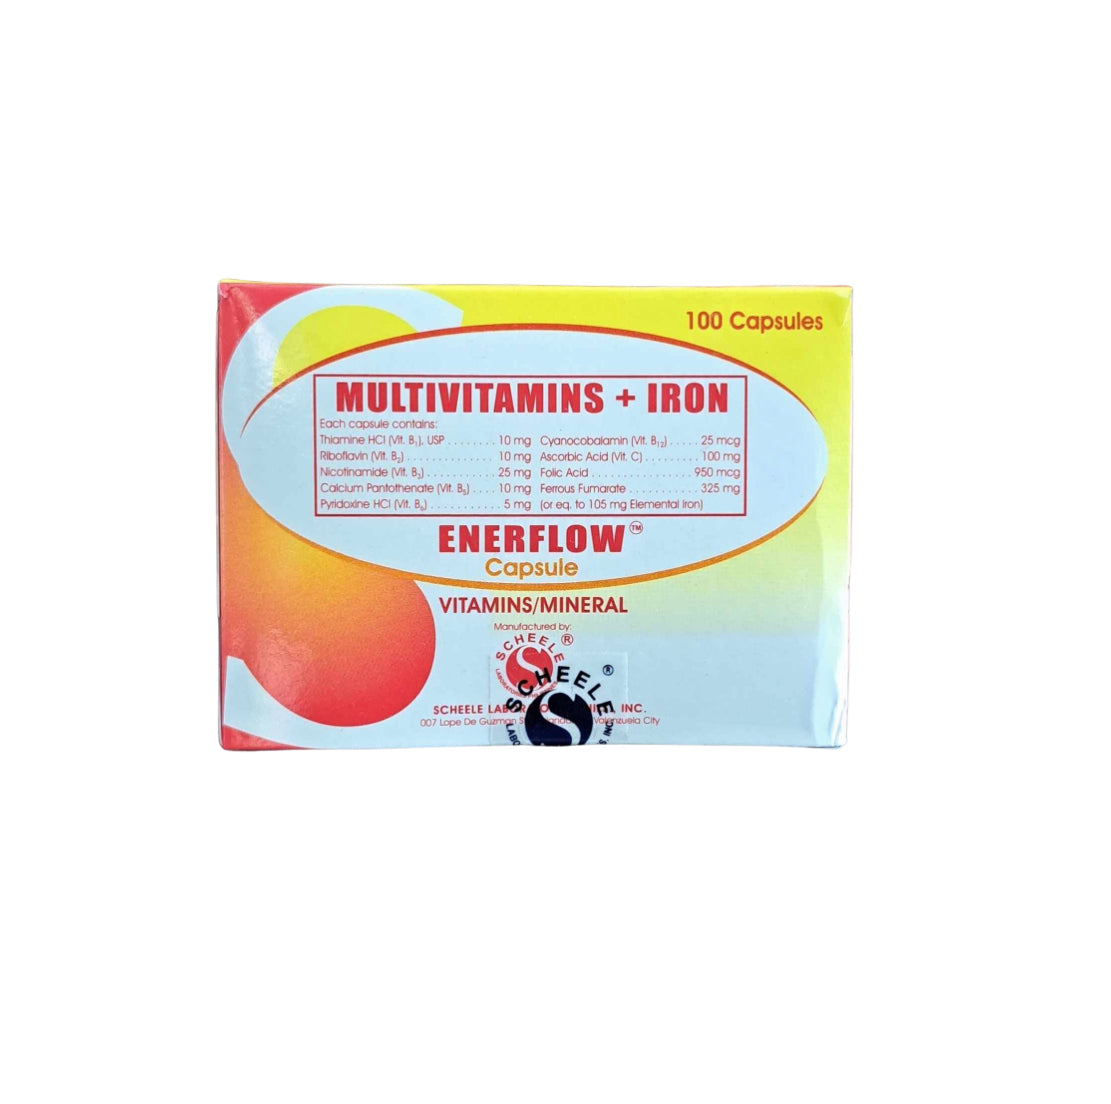 Multivitamins+Iron Capsule x 30 Monthly Maintenance Dose